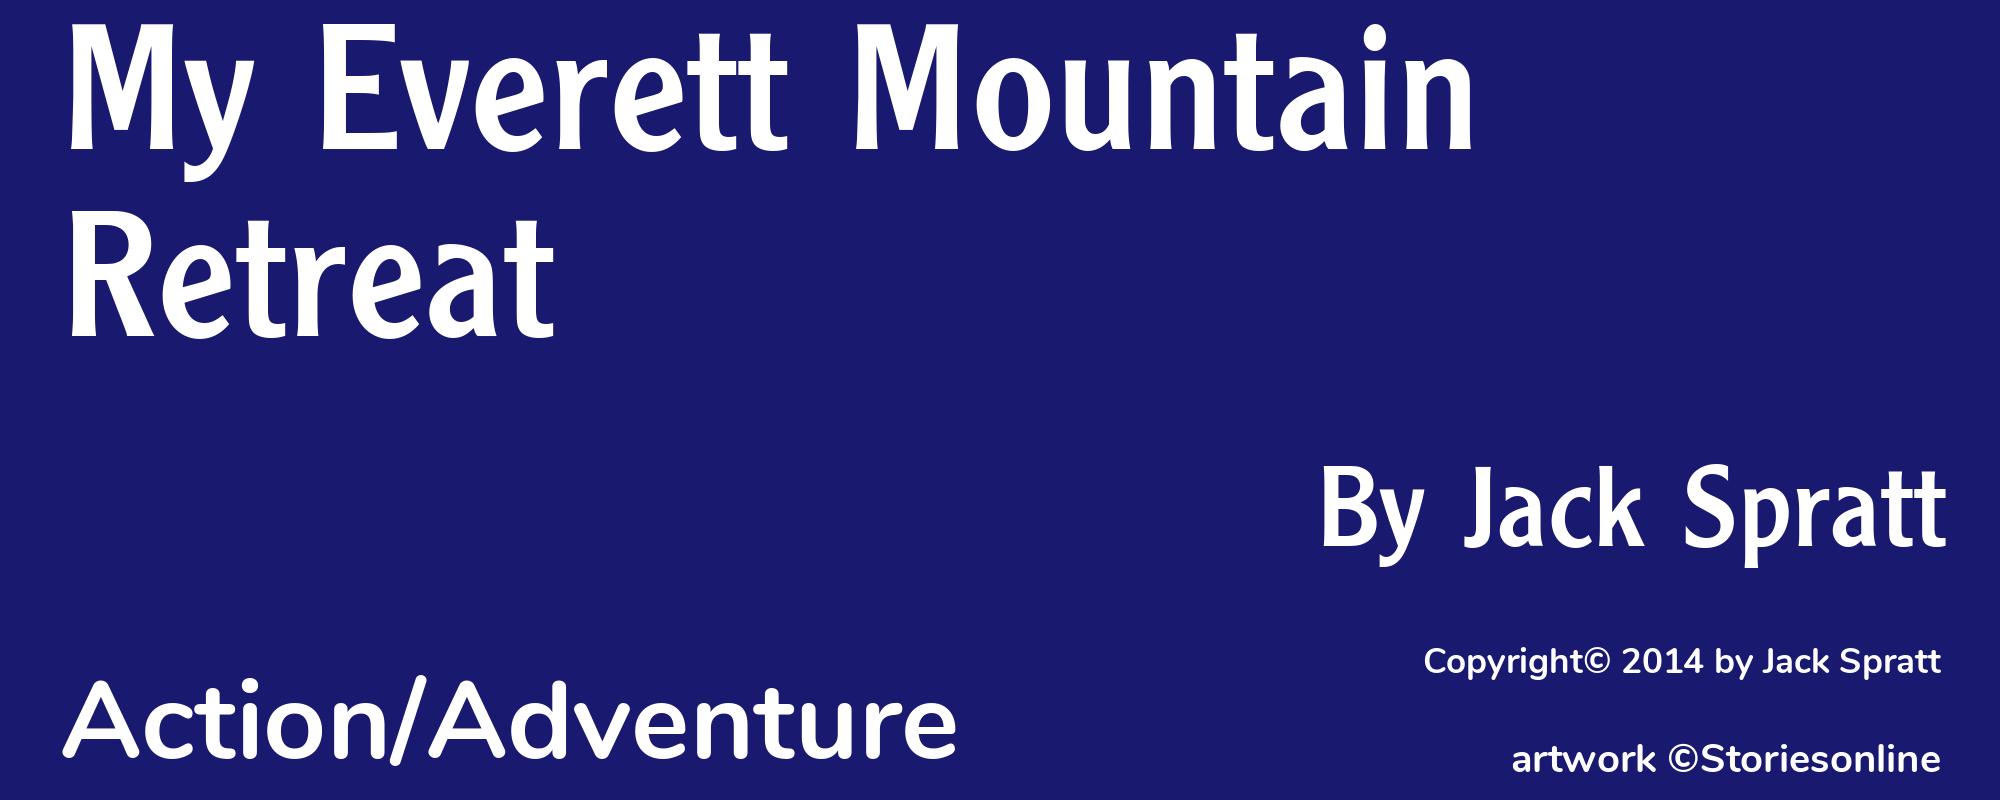 My Everett Mountain Retreat - Cover